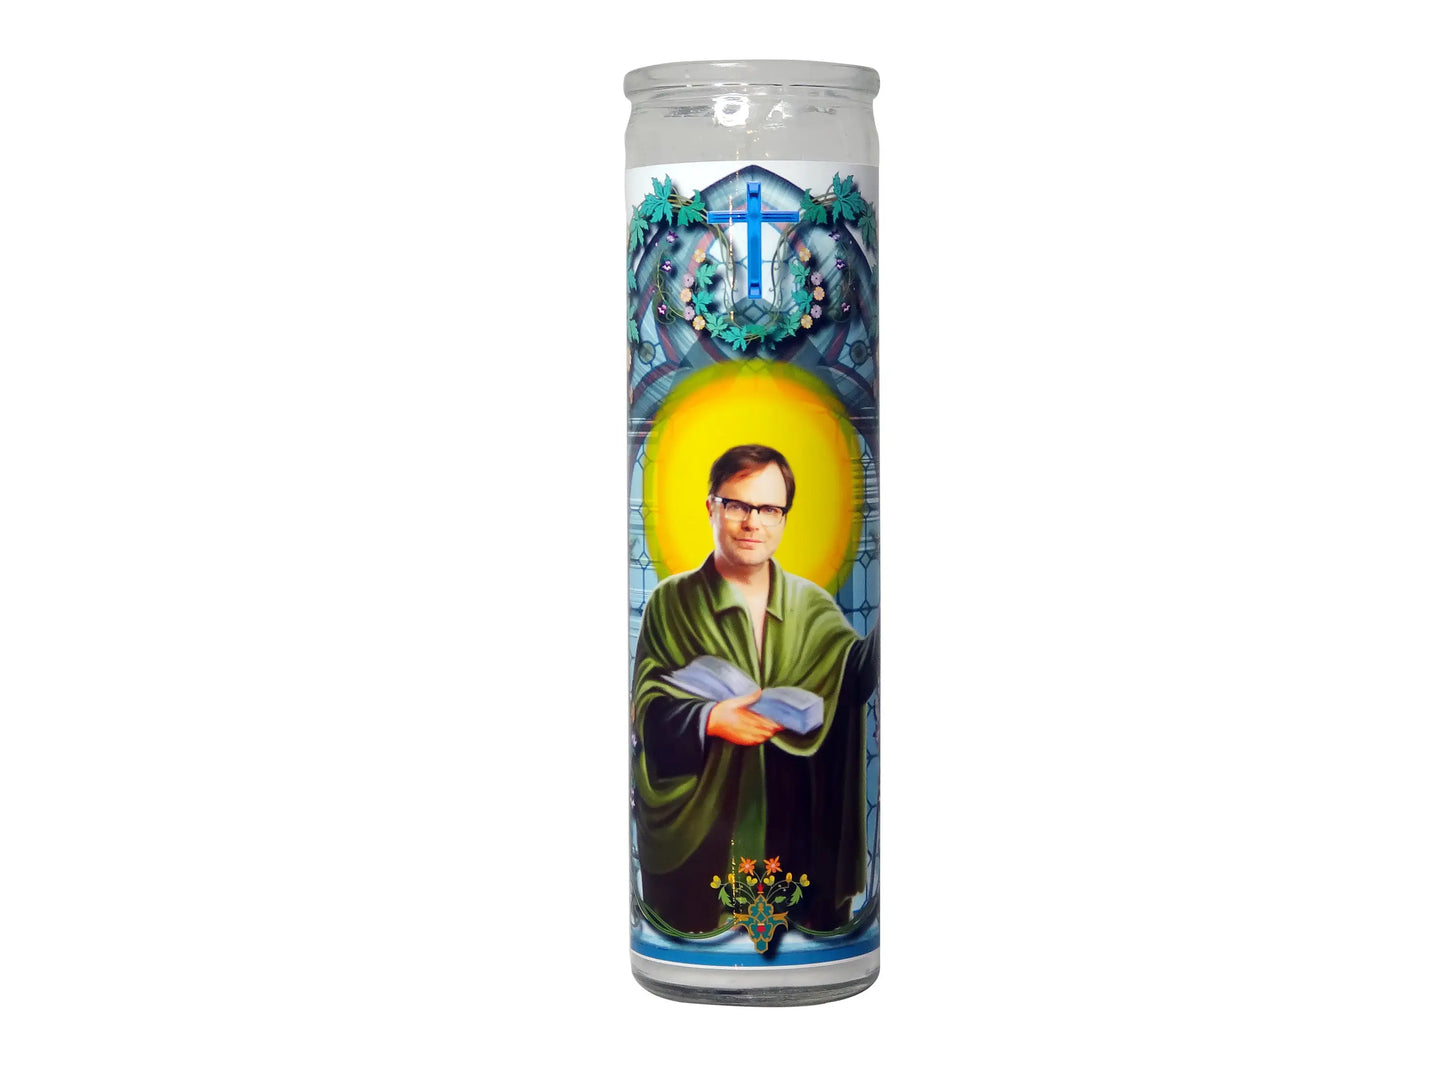 Dwight Schrute Prayer Candle